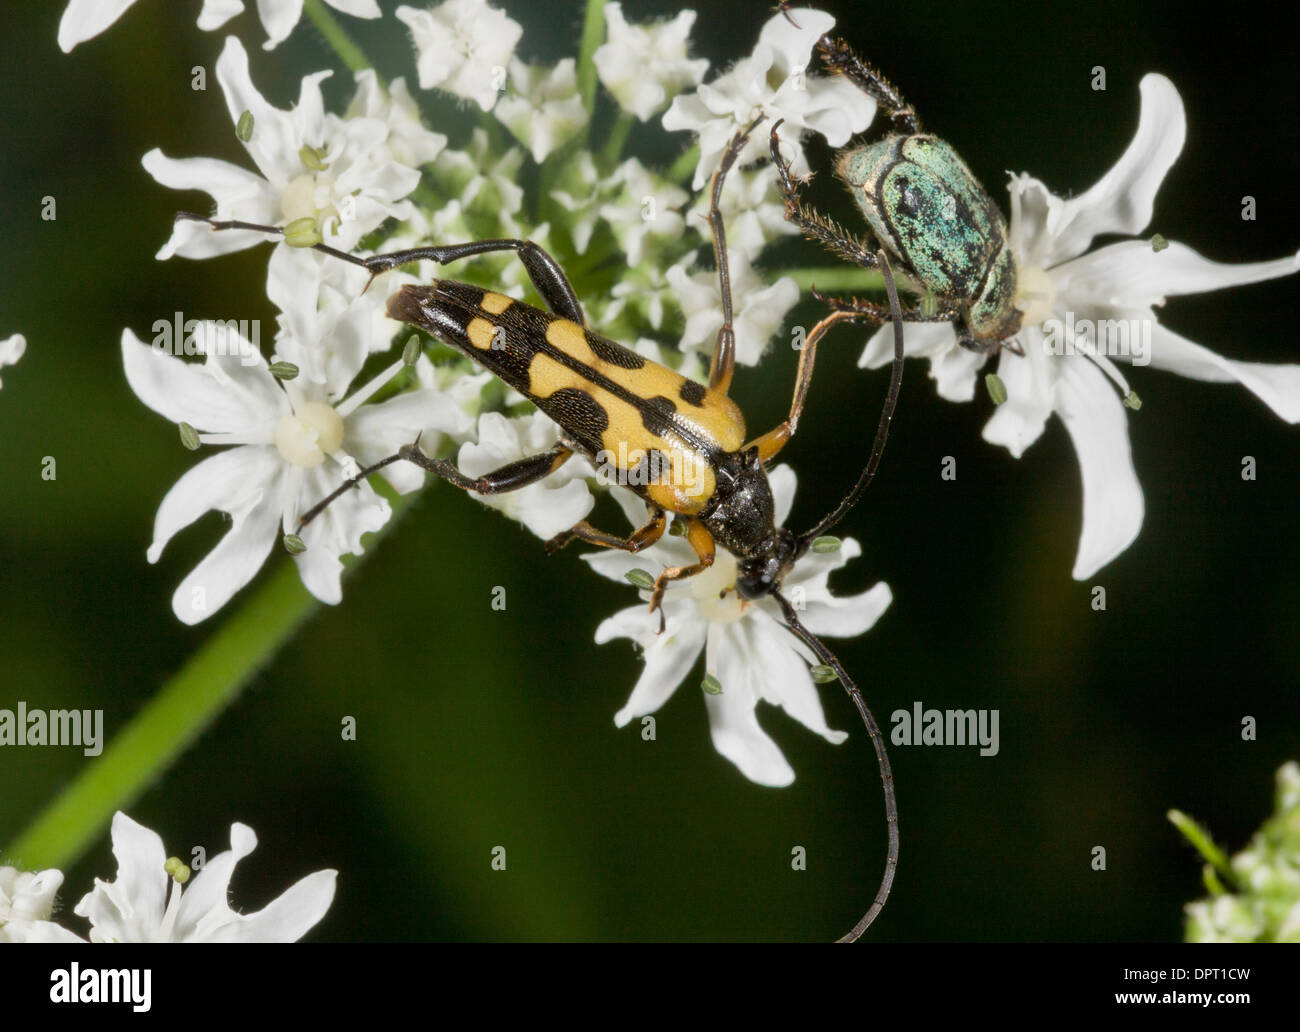 A common longhorn beetle, Strangalia maculata feeding on umbellifer flowers. Stock Photo